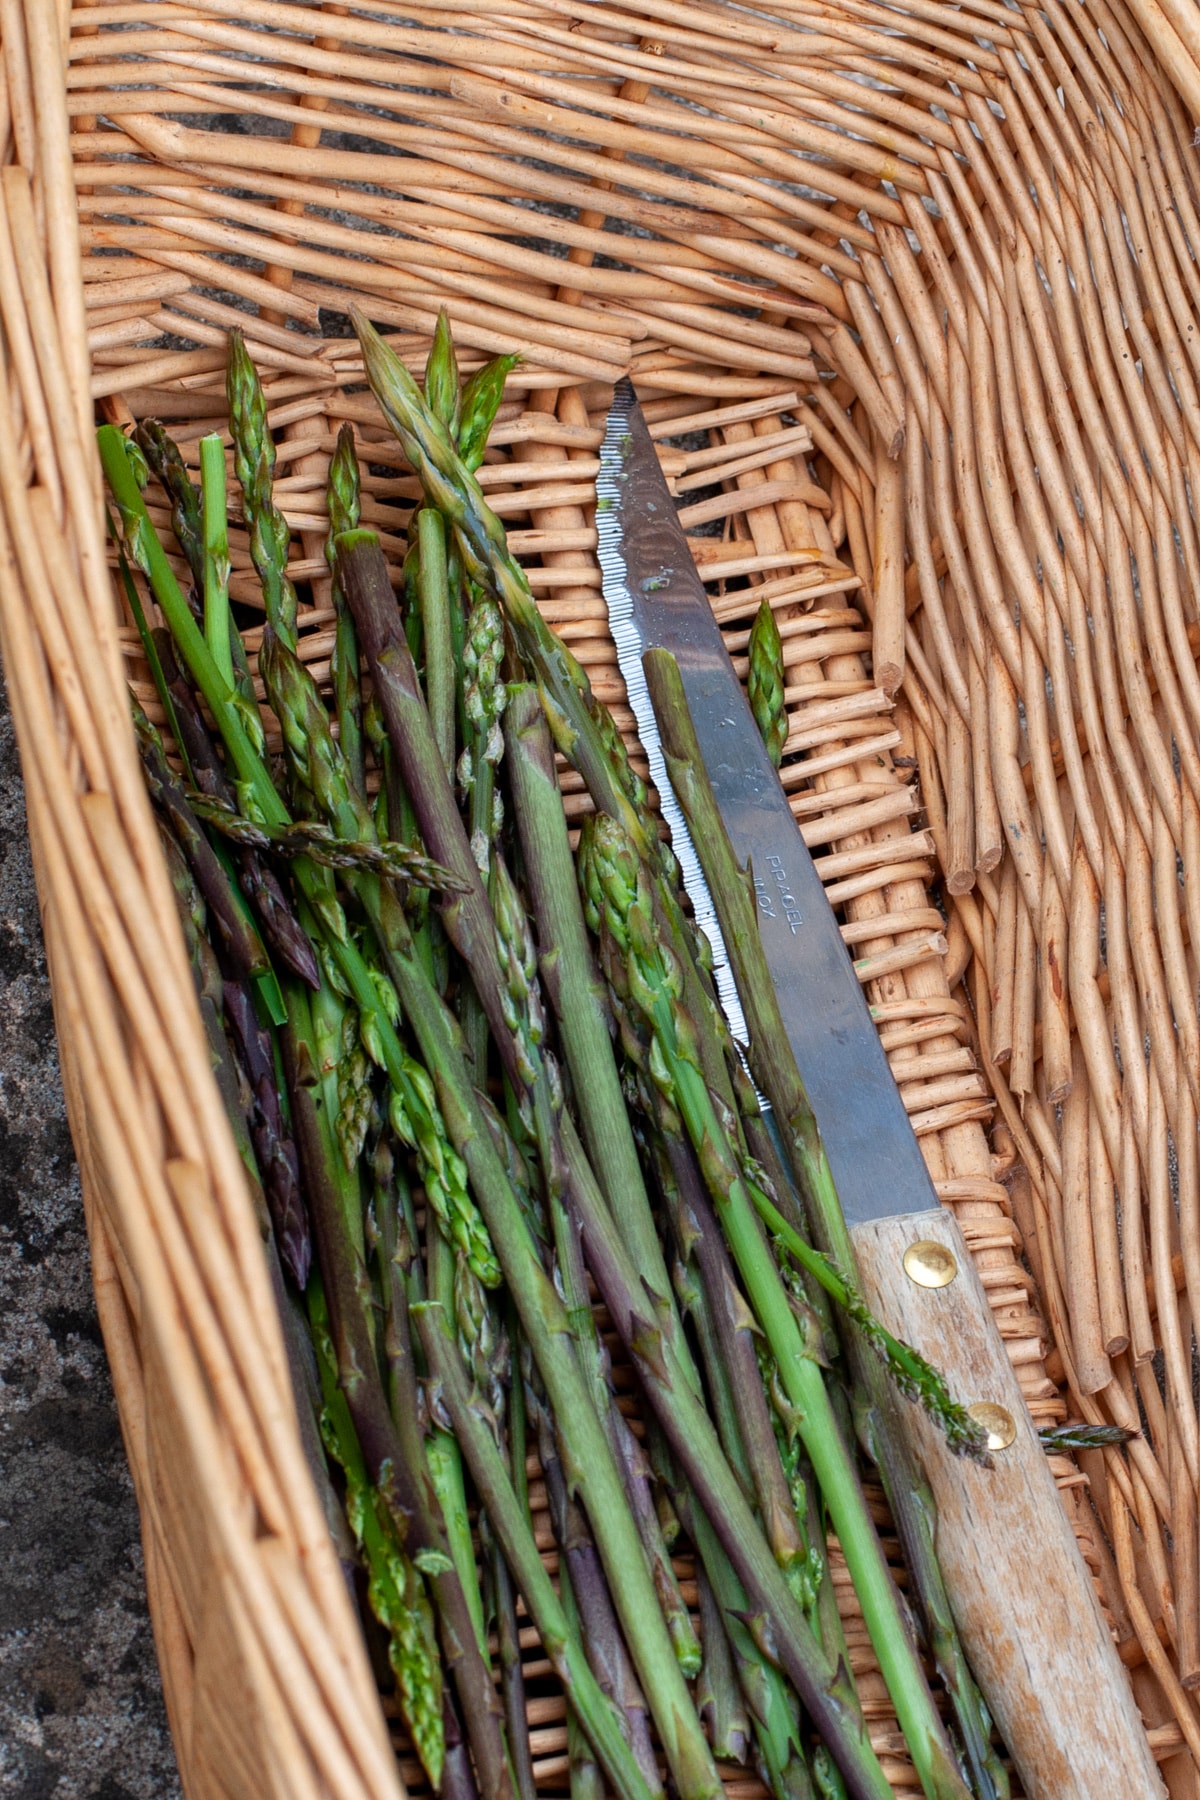 wild asparagus in a basket